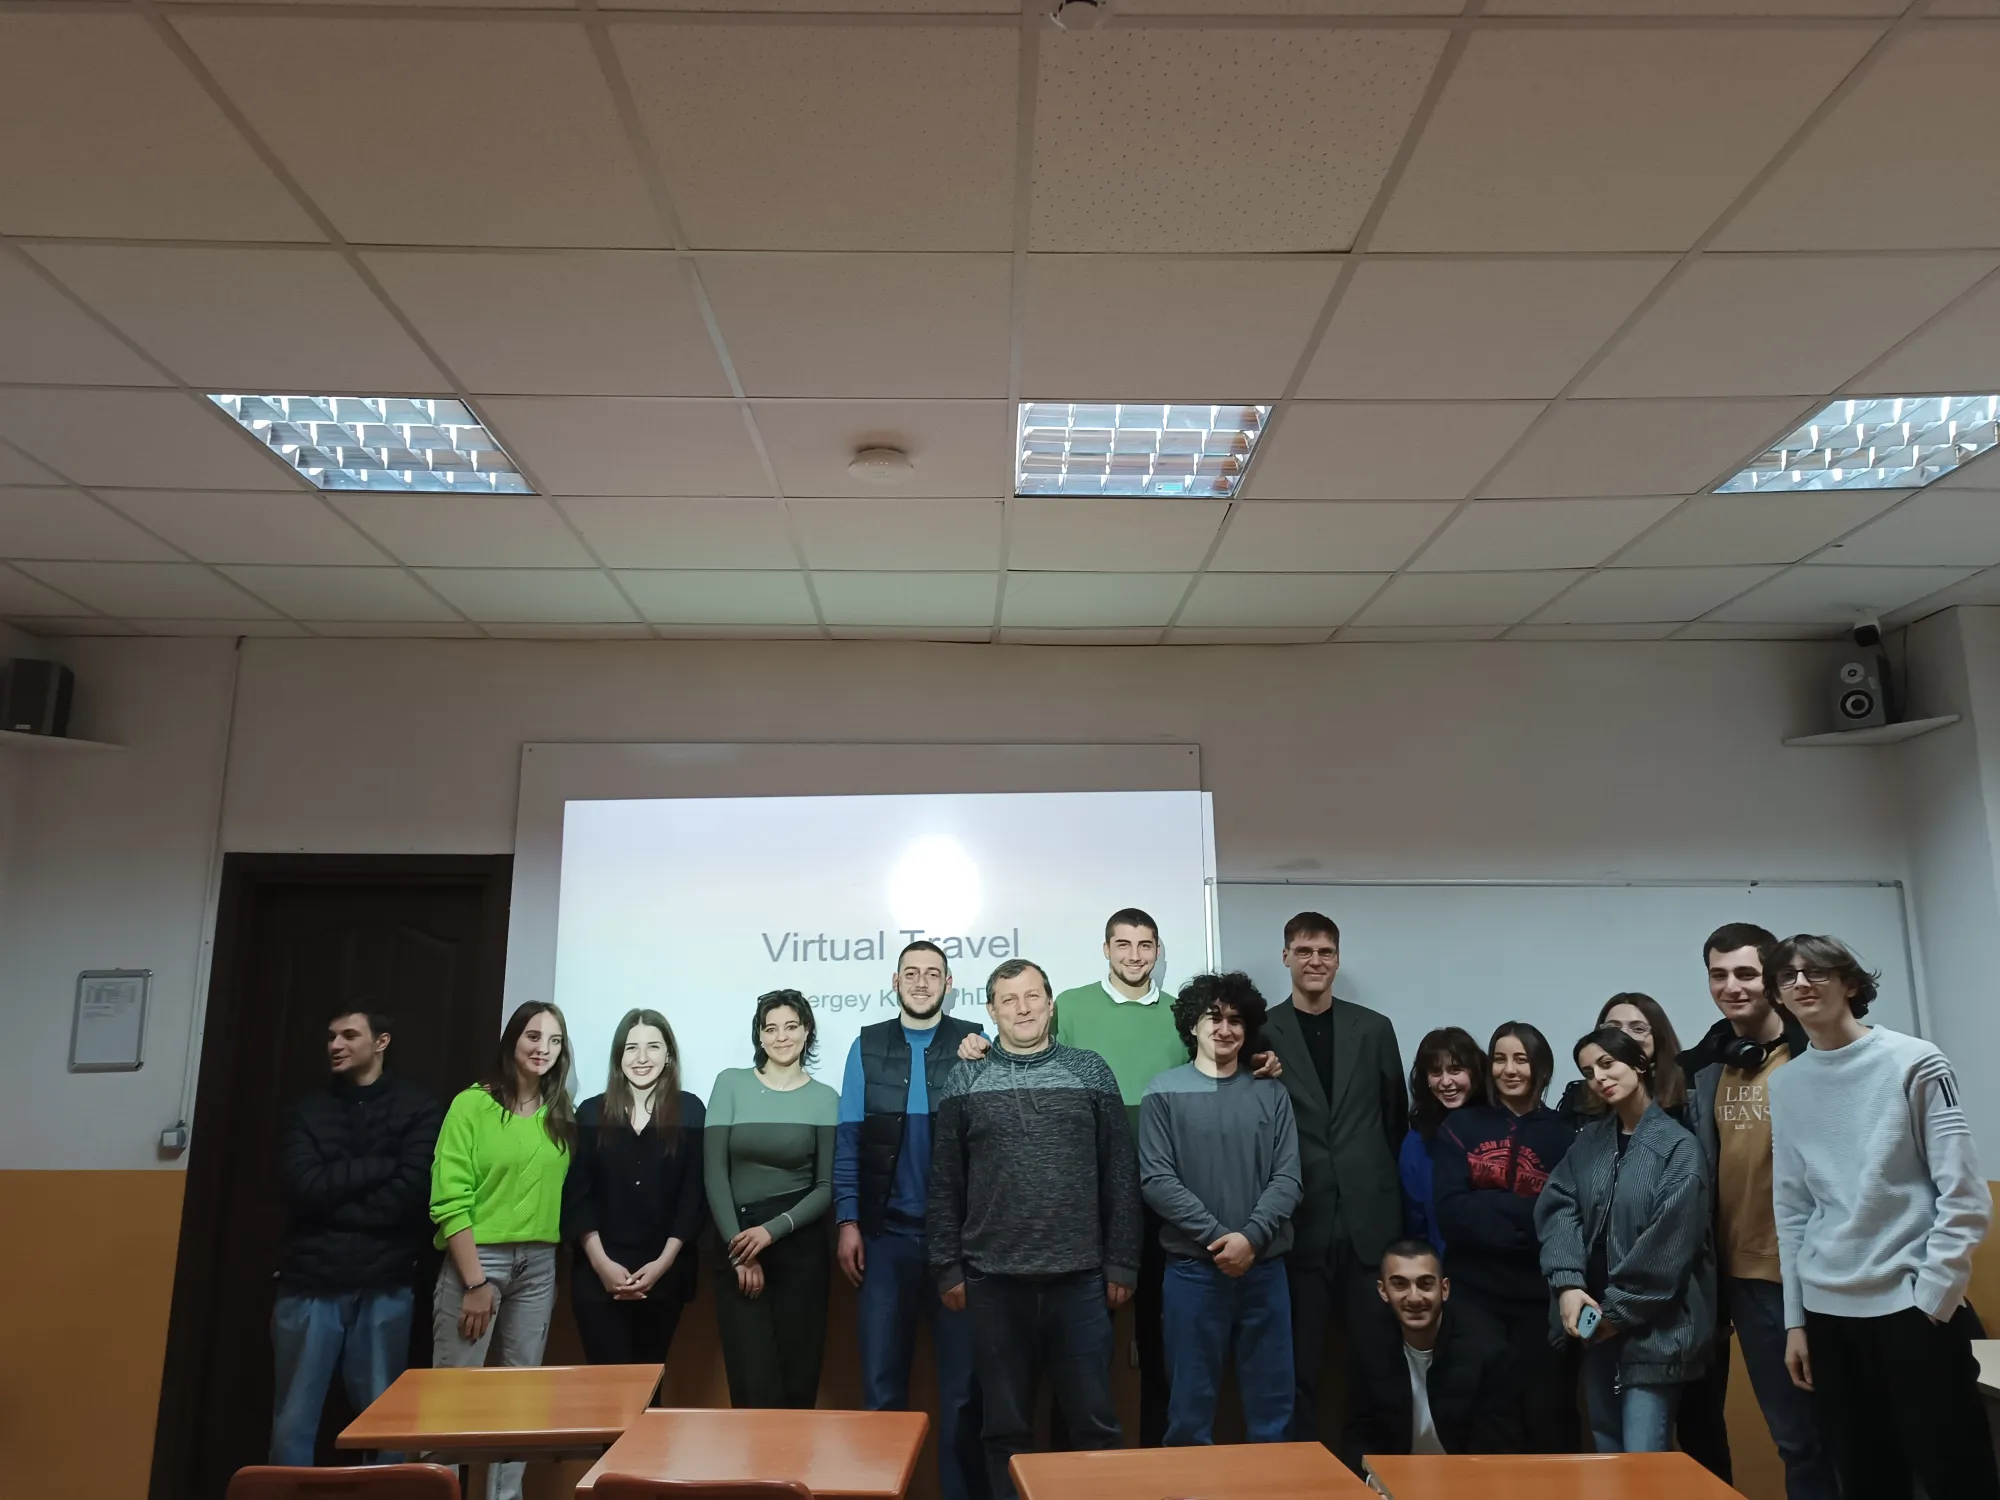 Dr. Sergey Kaska's seminar - "Virtual Tourism"